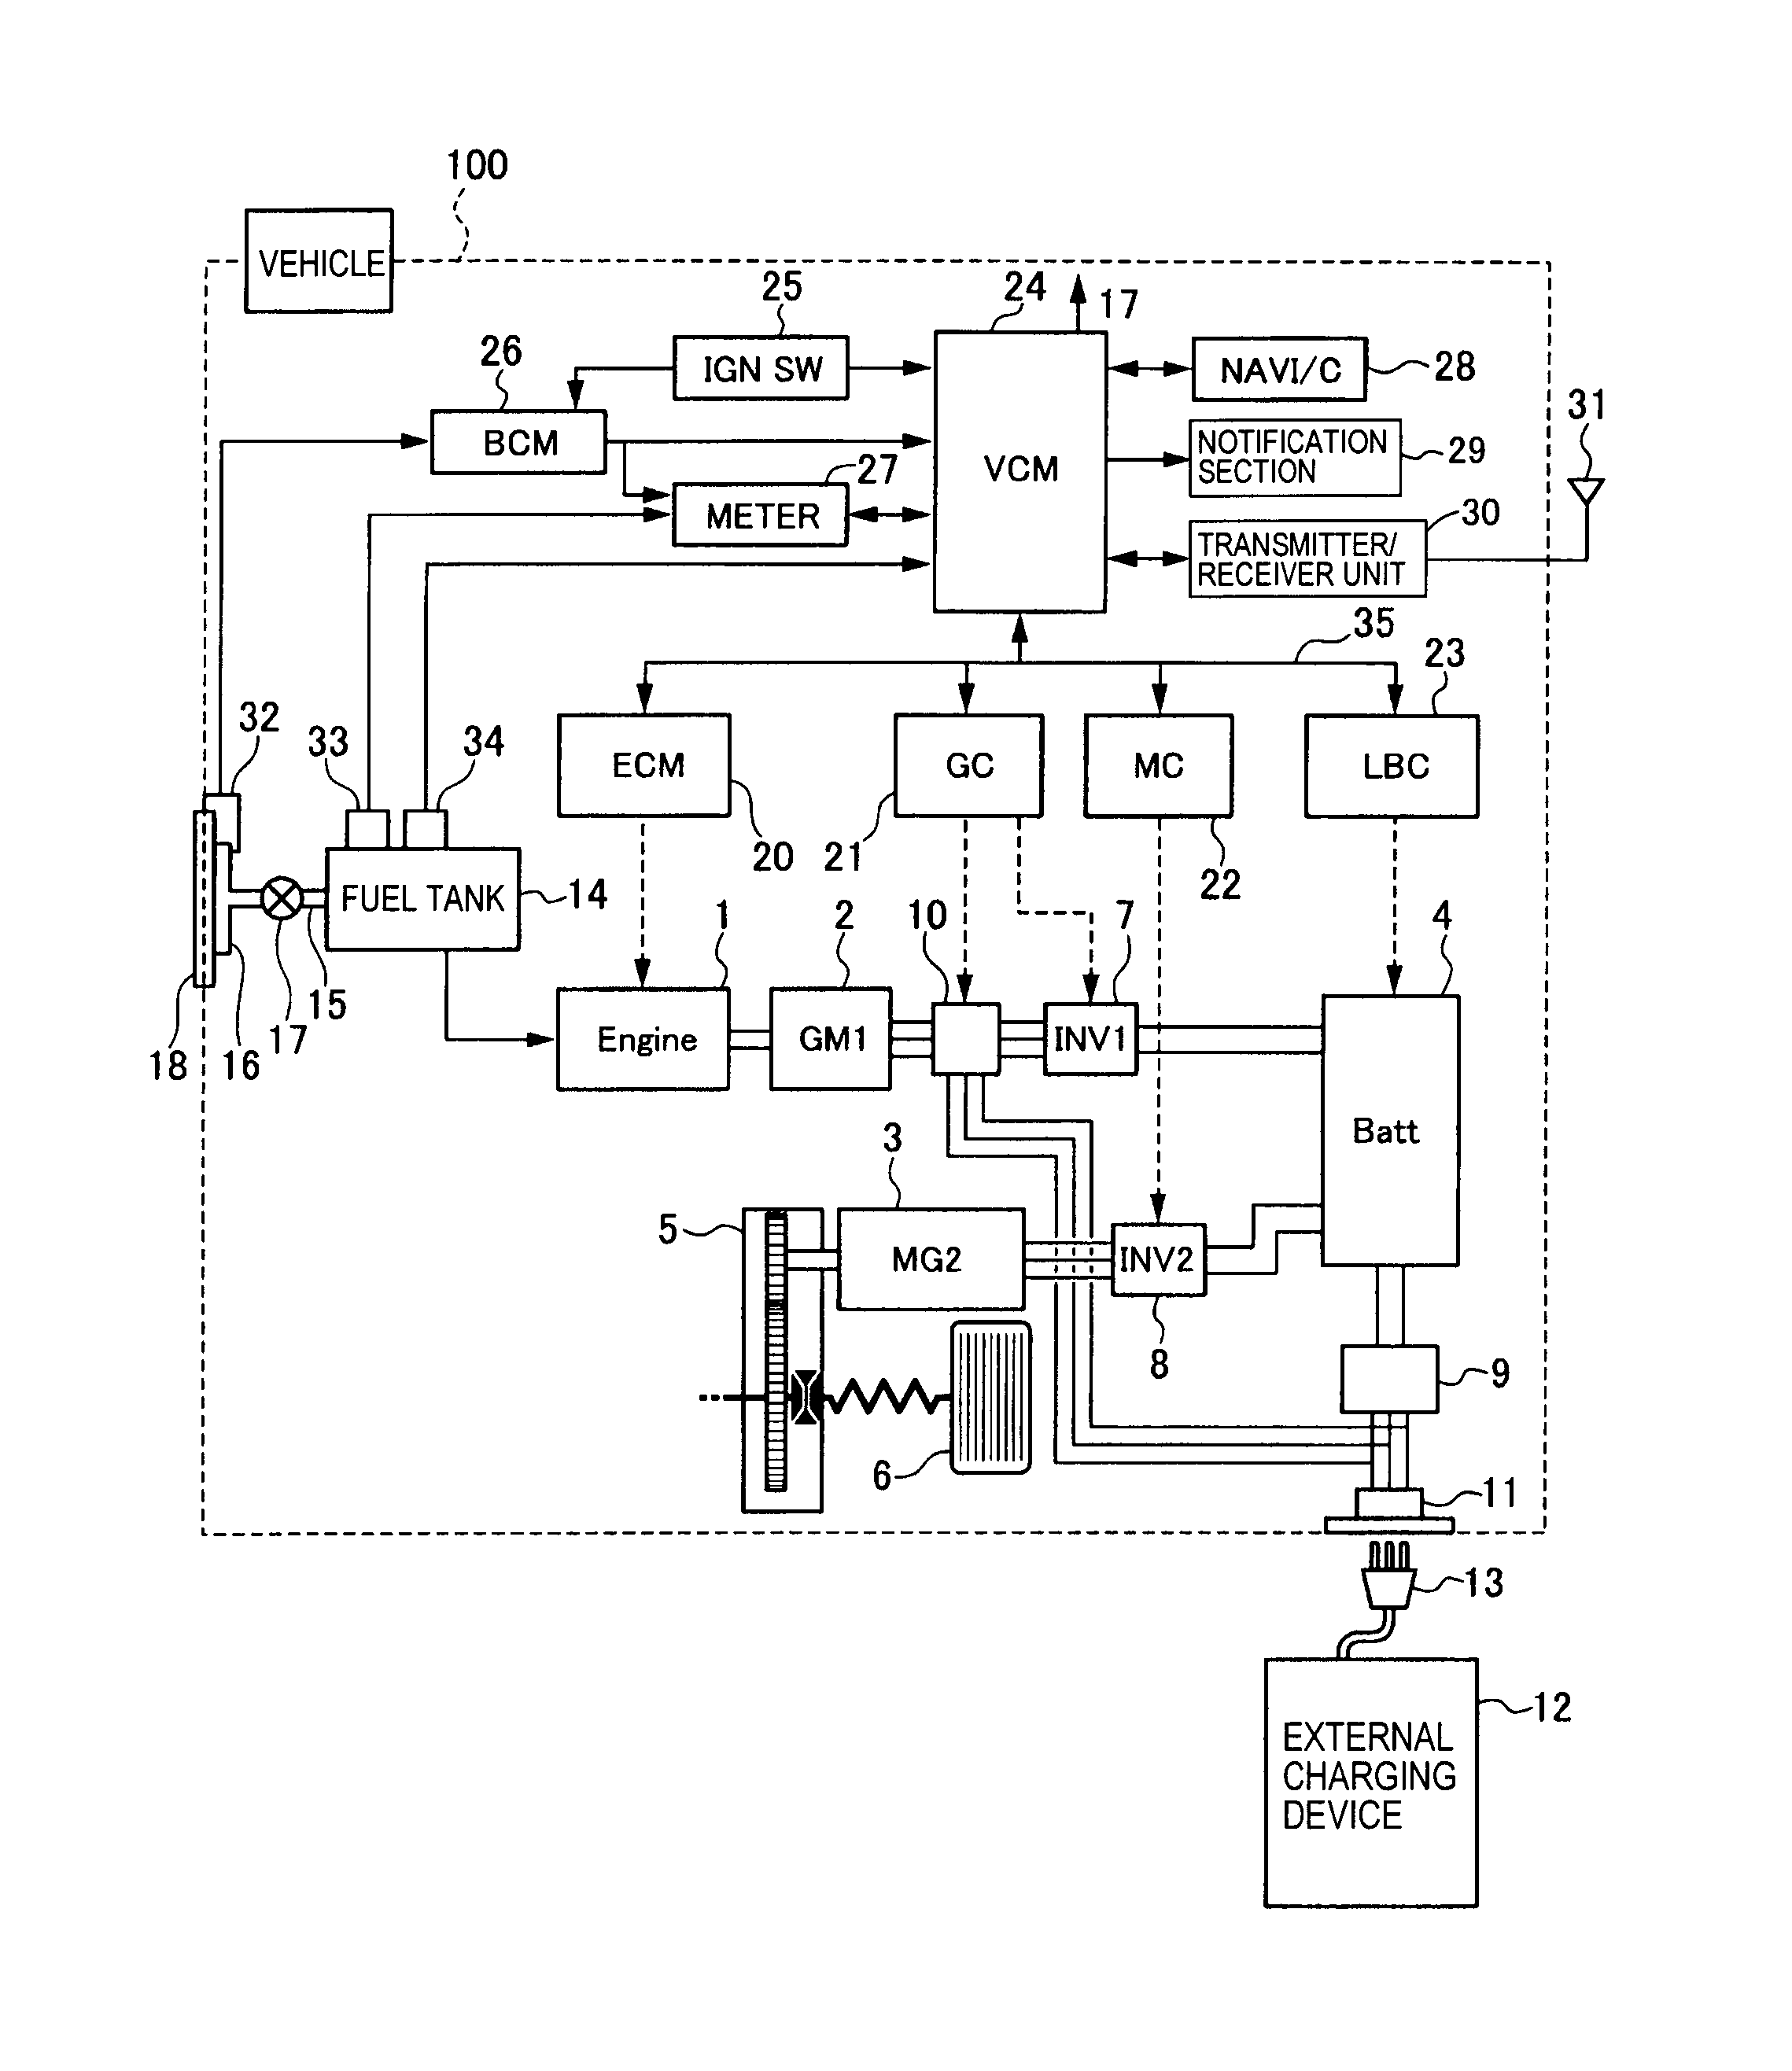 326b1230p001 heating element wiring diagram